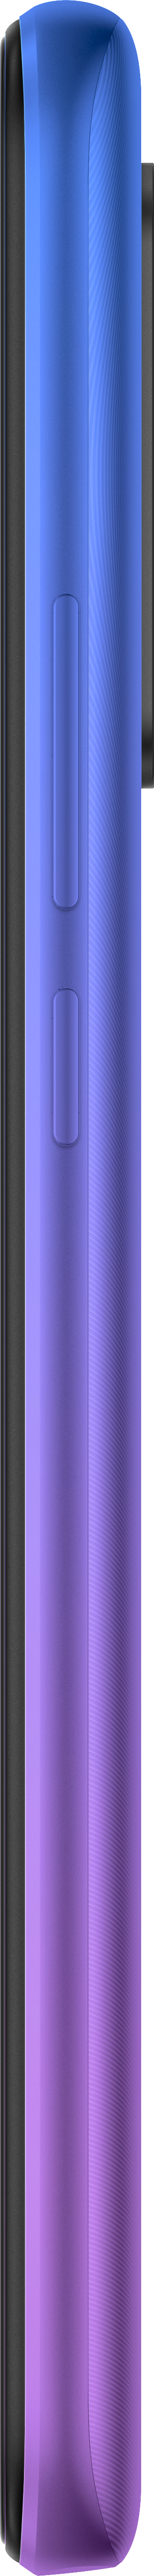 GB Sunset 64 SIM Dual Purple REDMI 9 XIAOMI